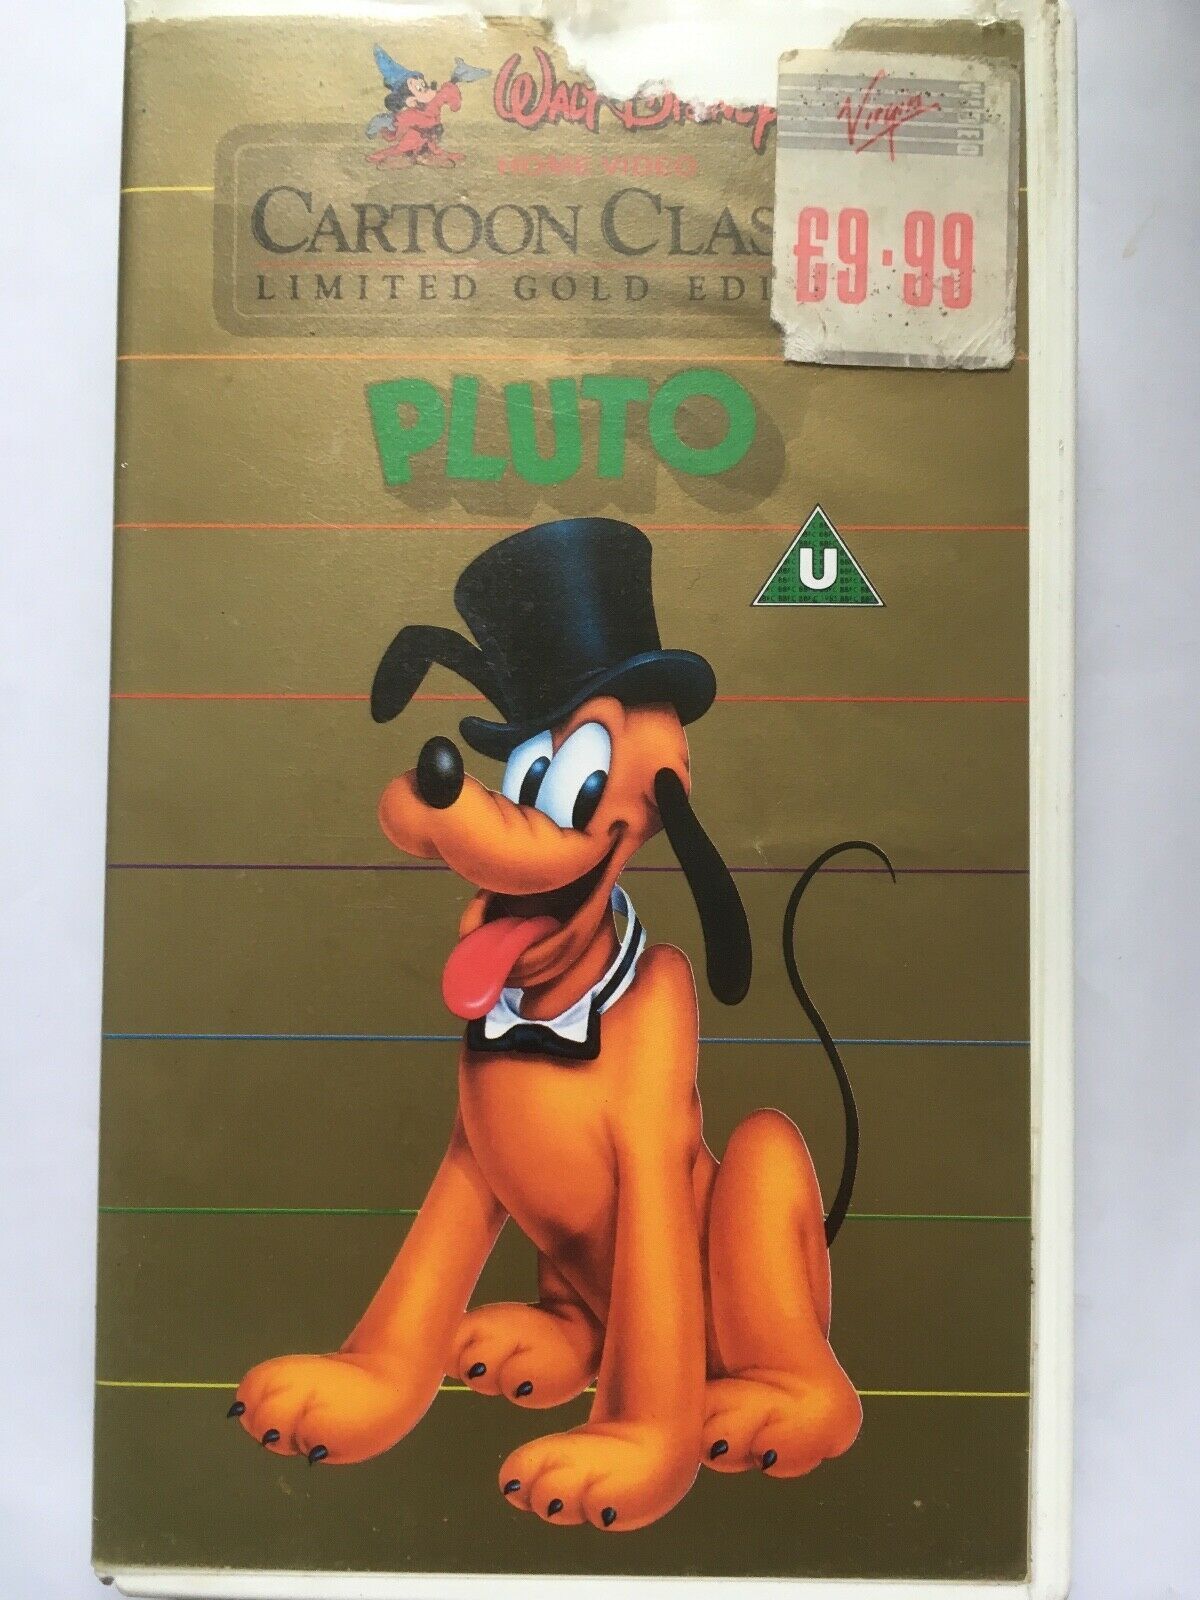 Cartoon Classics Limited Gold Edition - Pluto | Walt Disney Videos (UK)  Wiki | Fandom